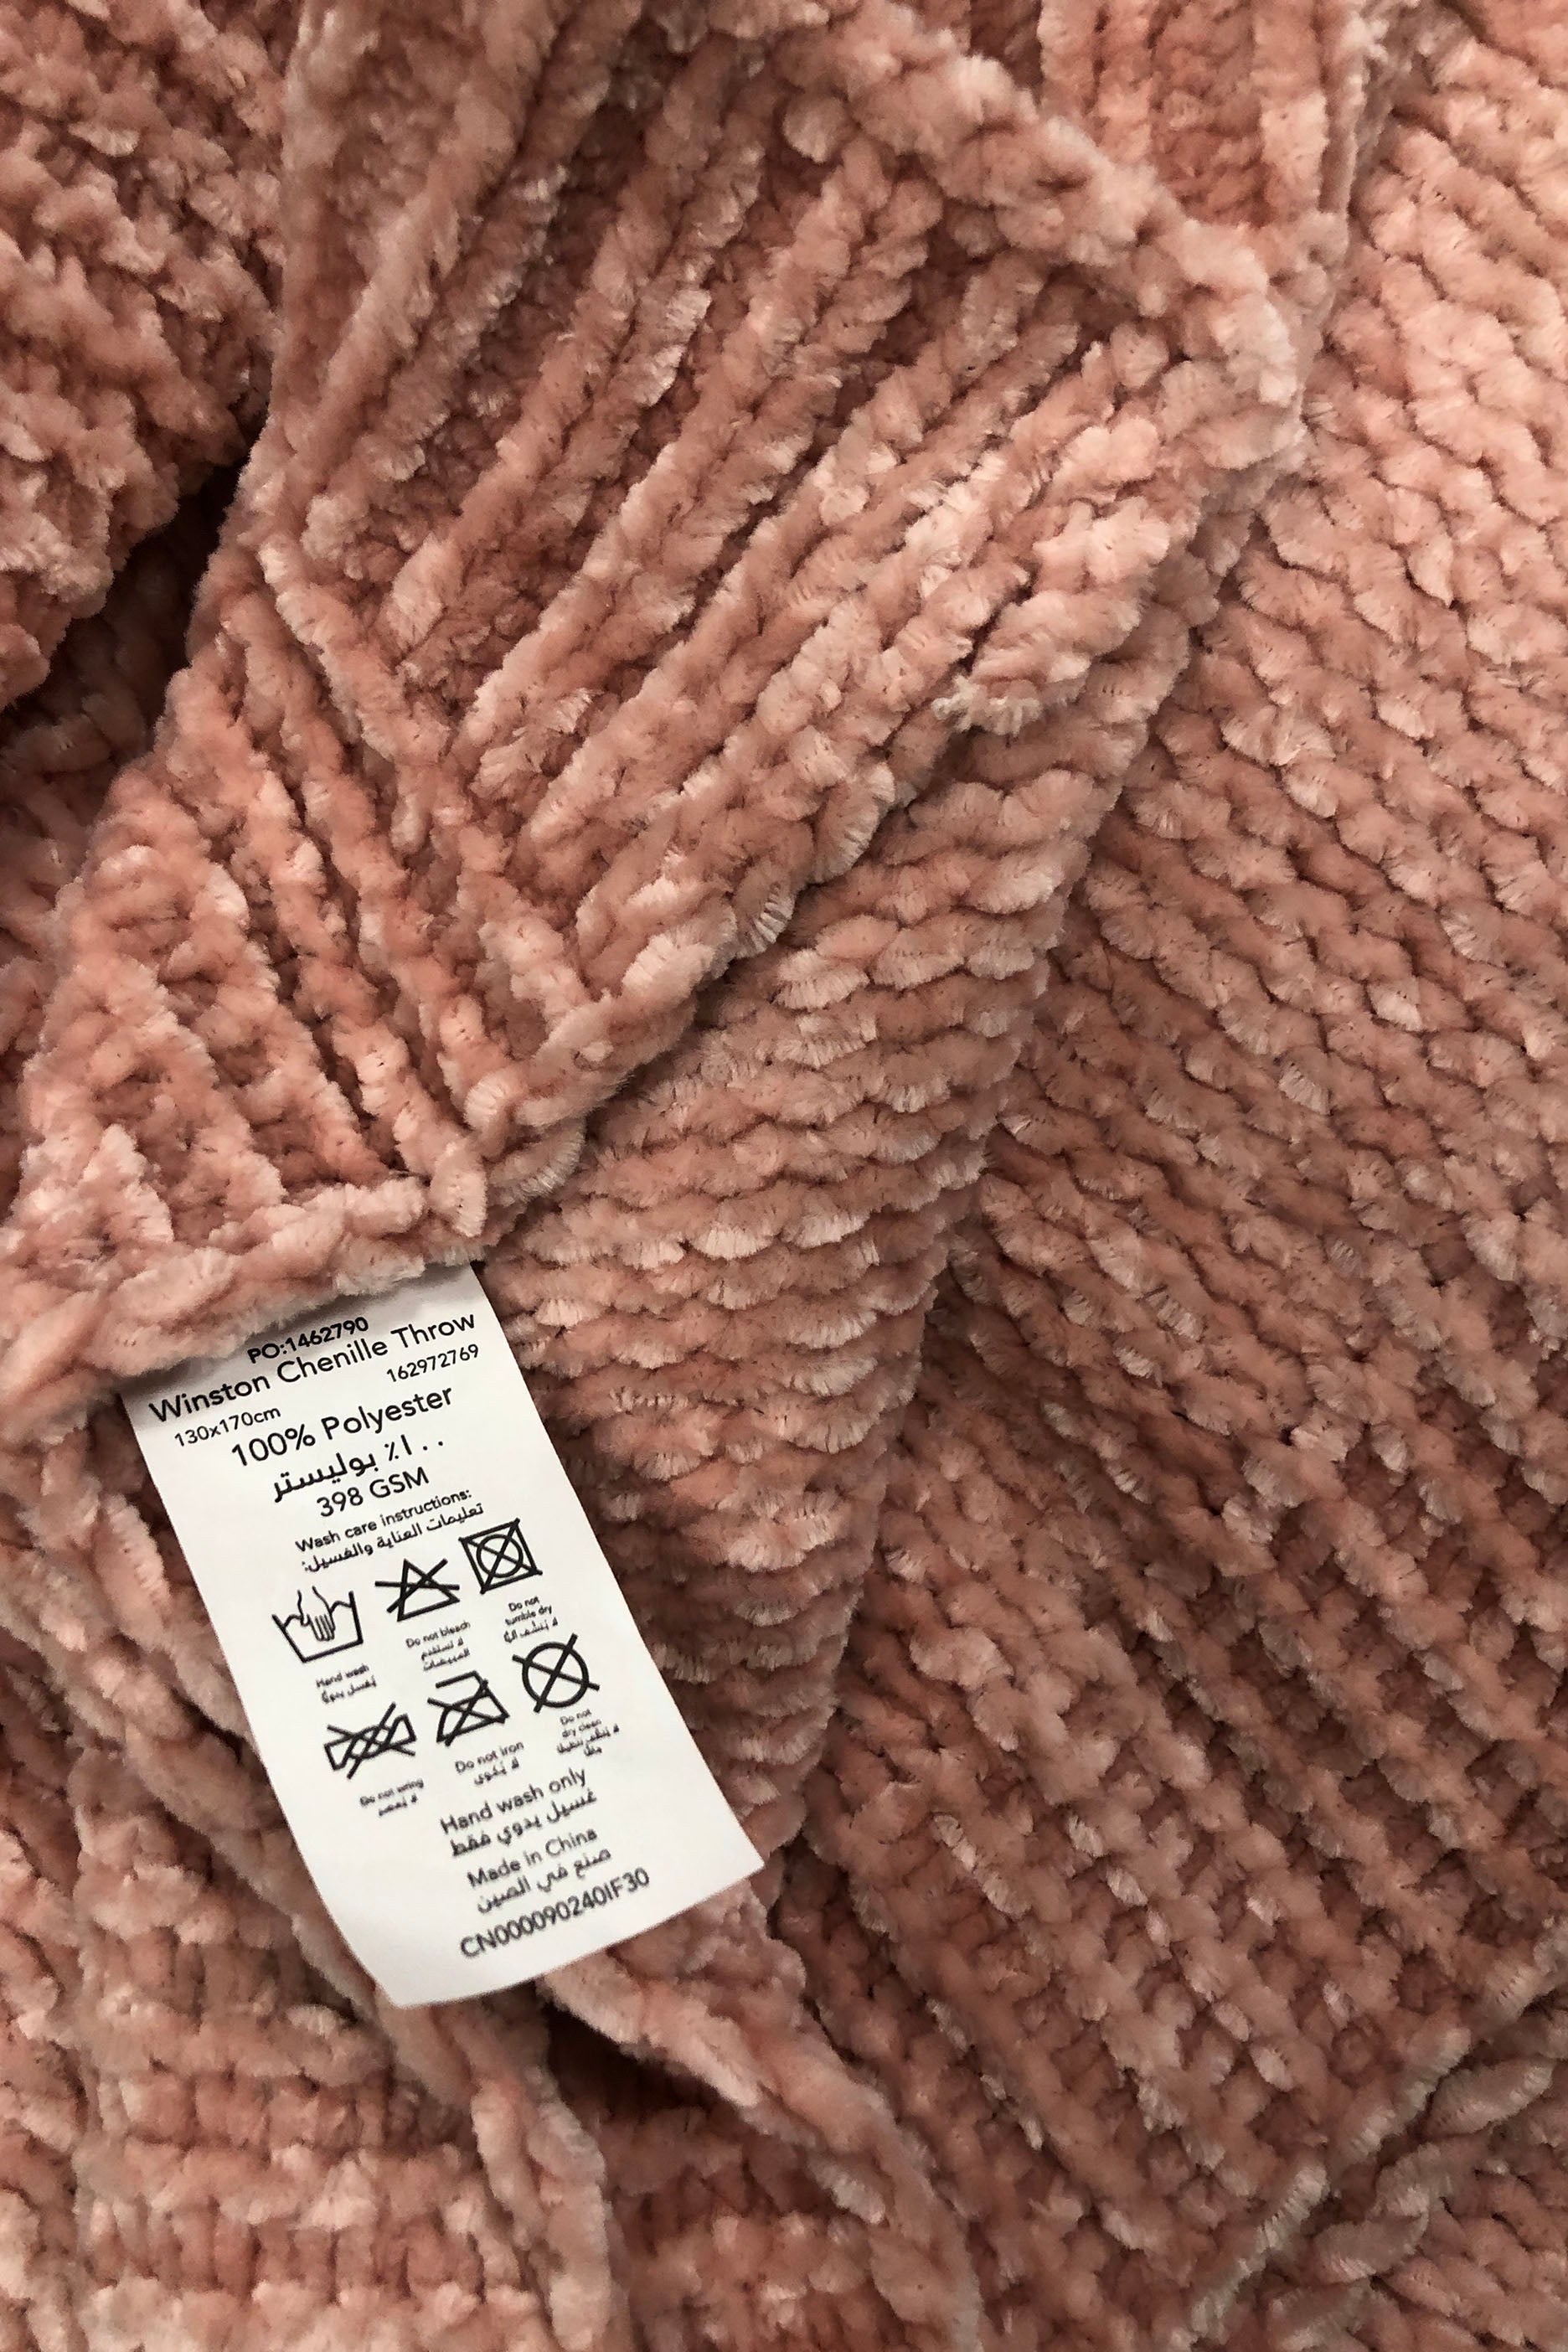 Pink Chenille Blanket (130x170cm)